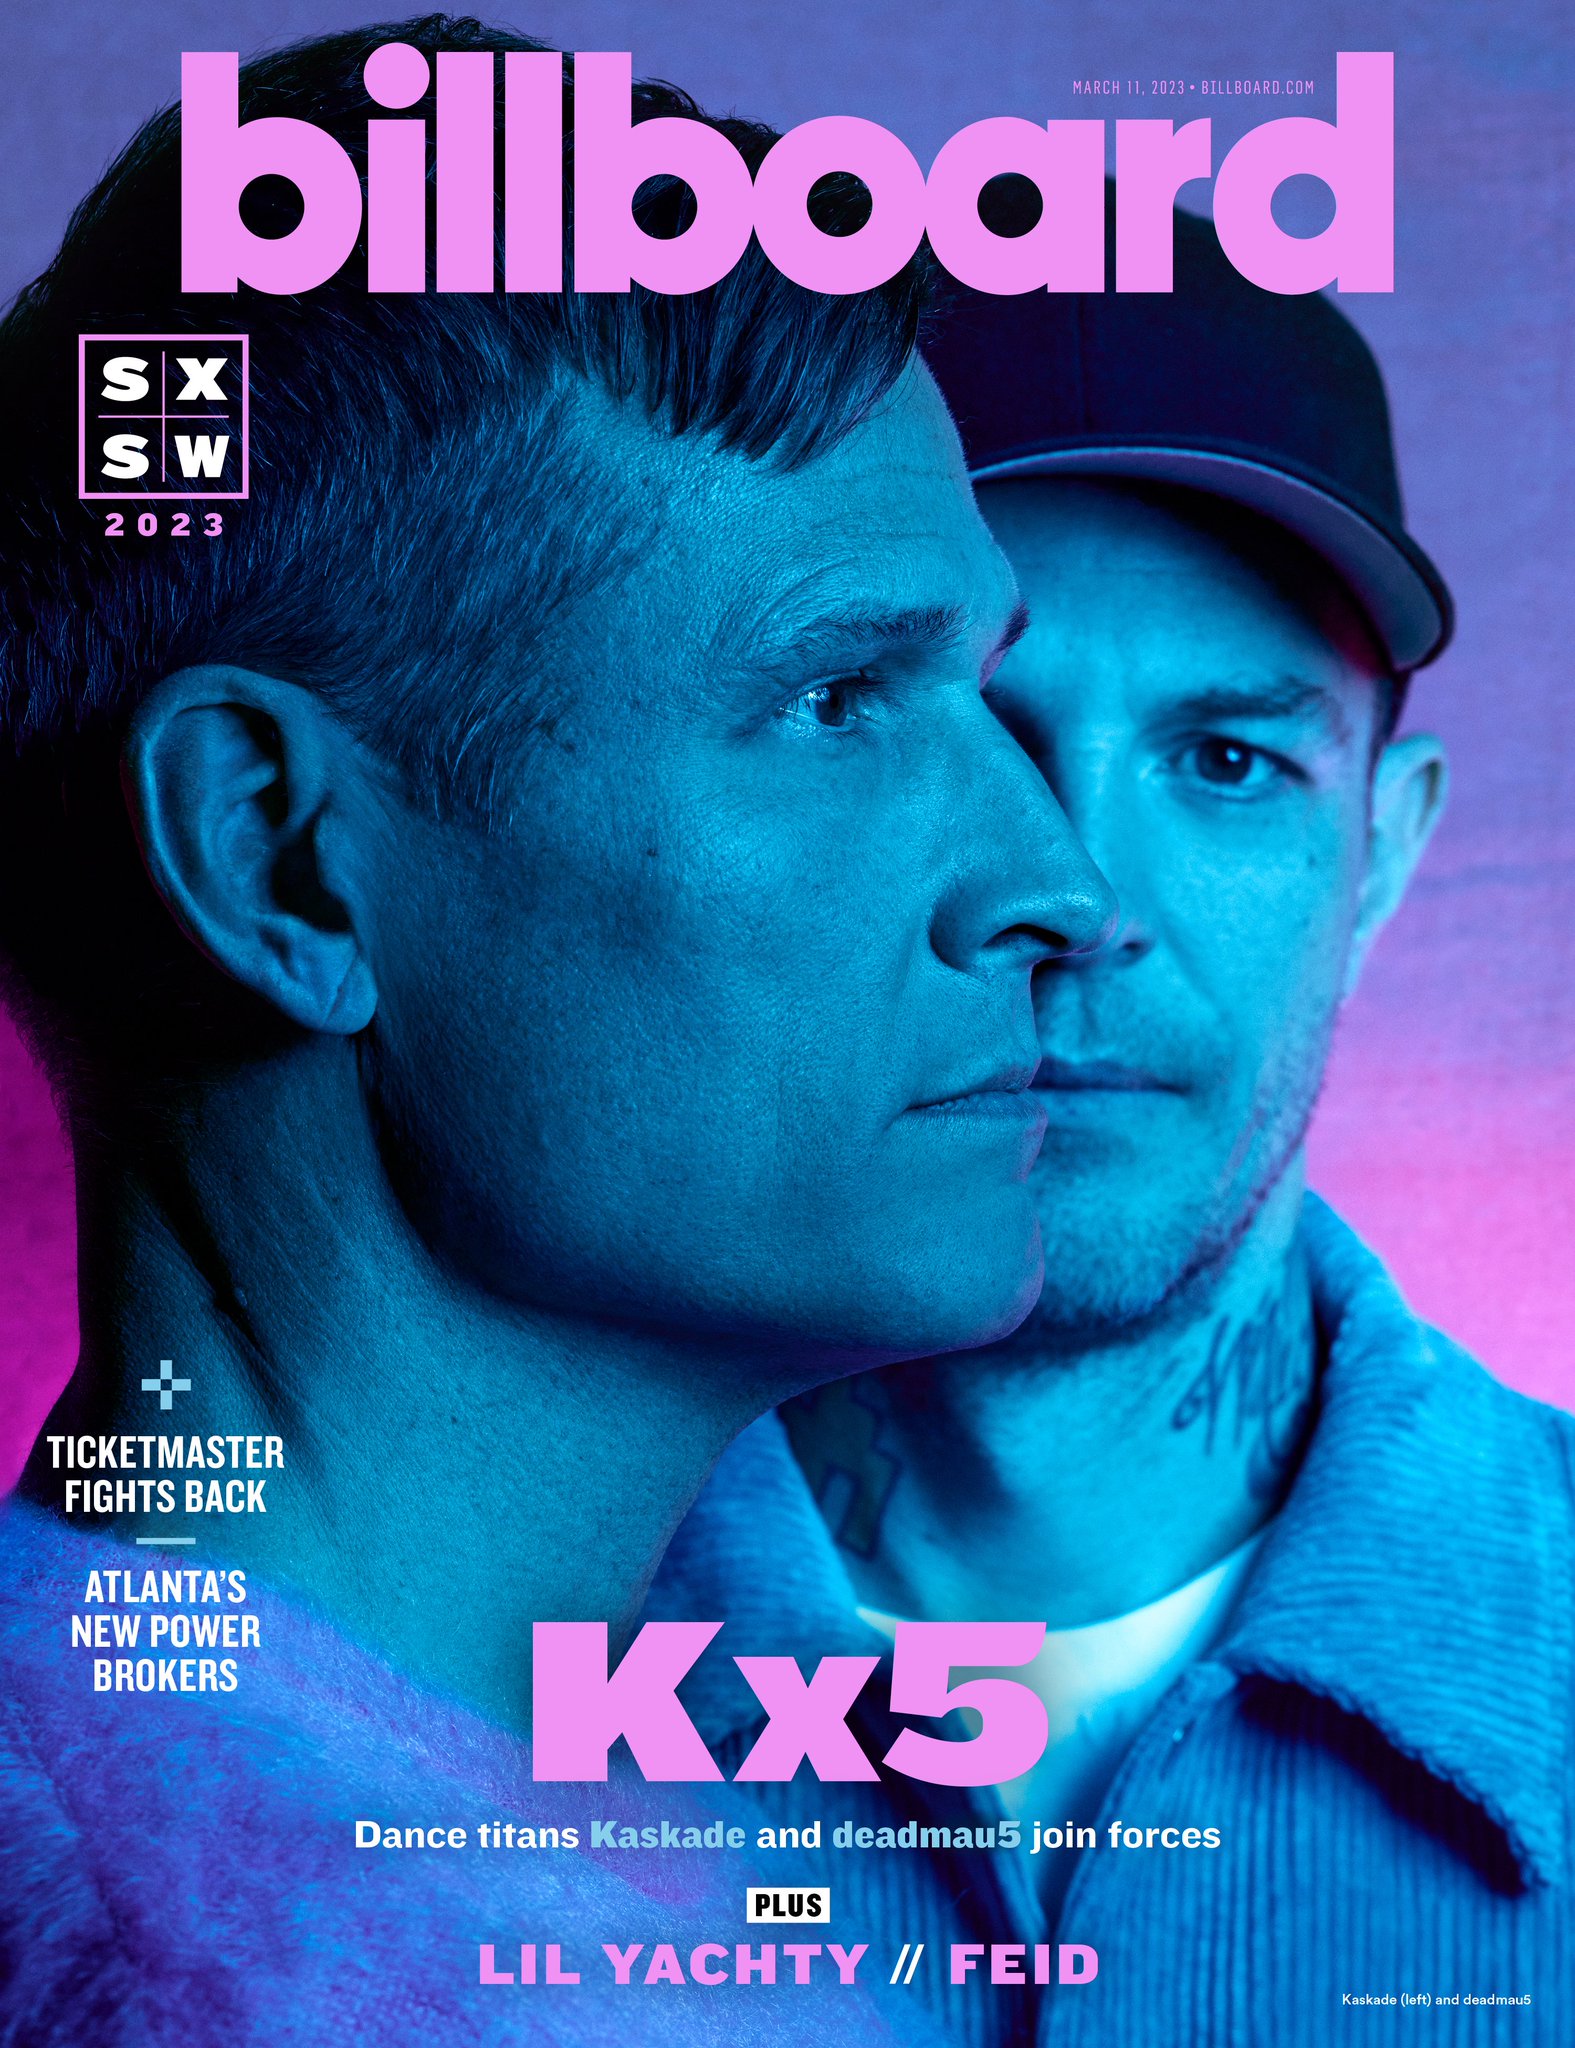 Kx5 Billboard cover